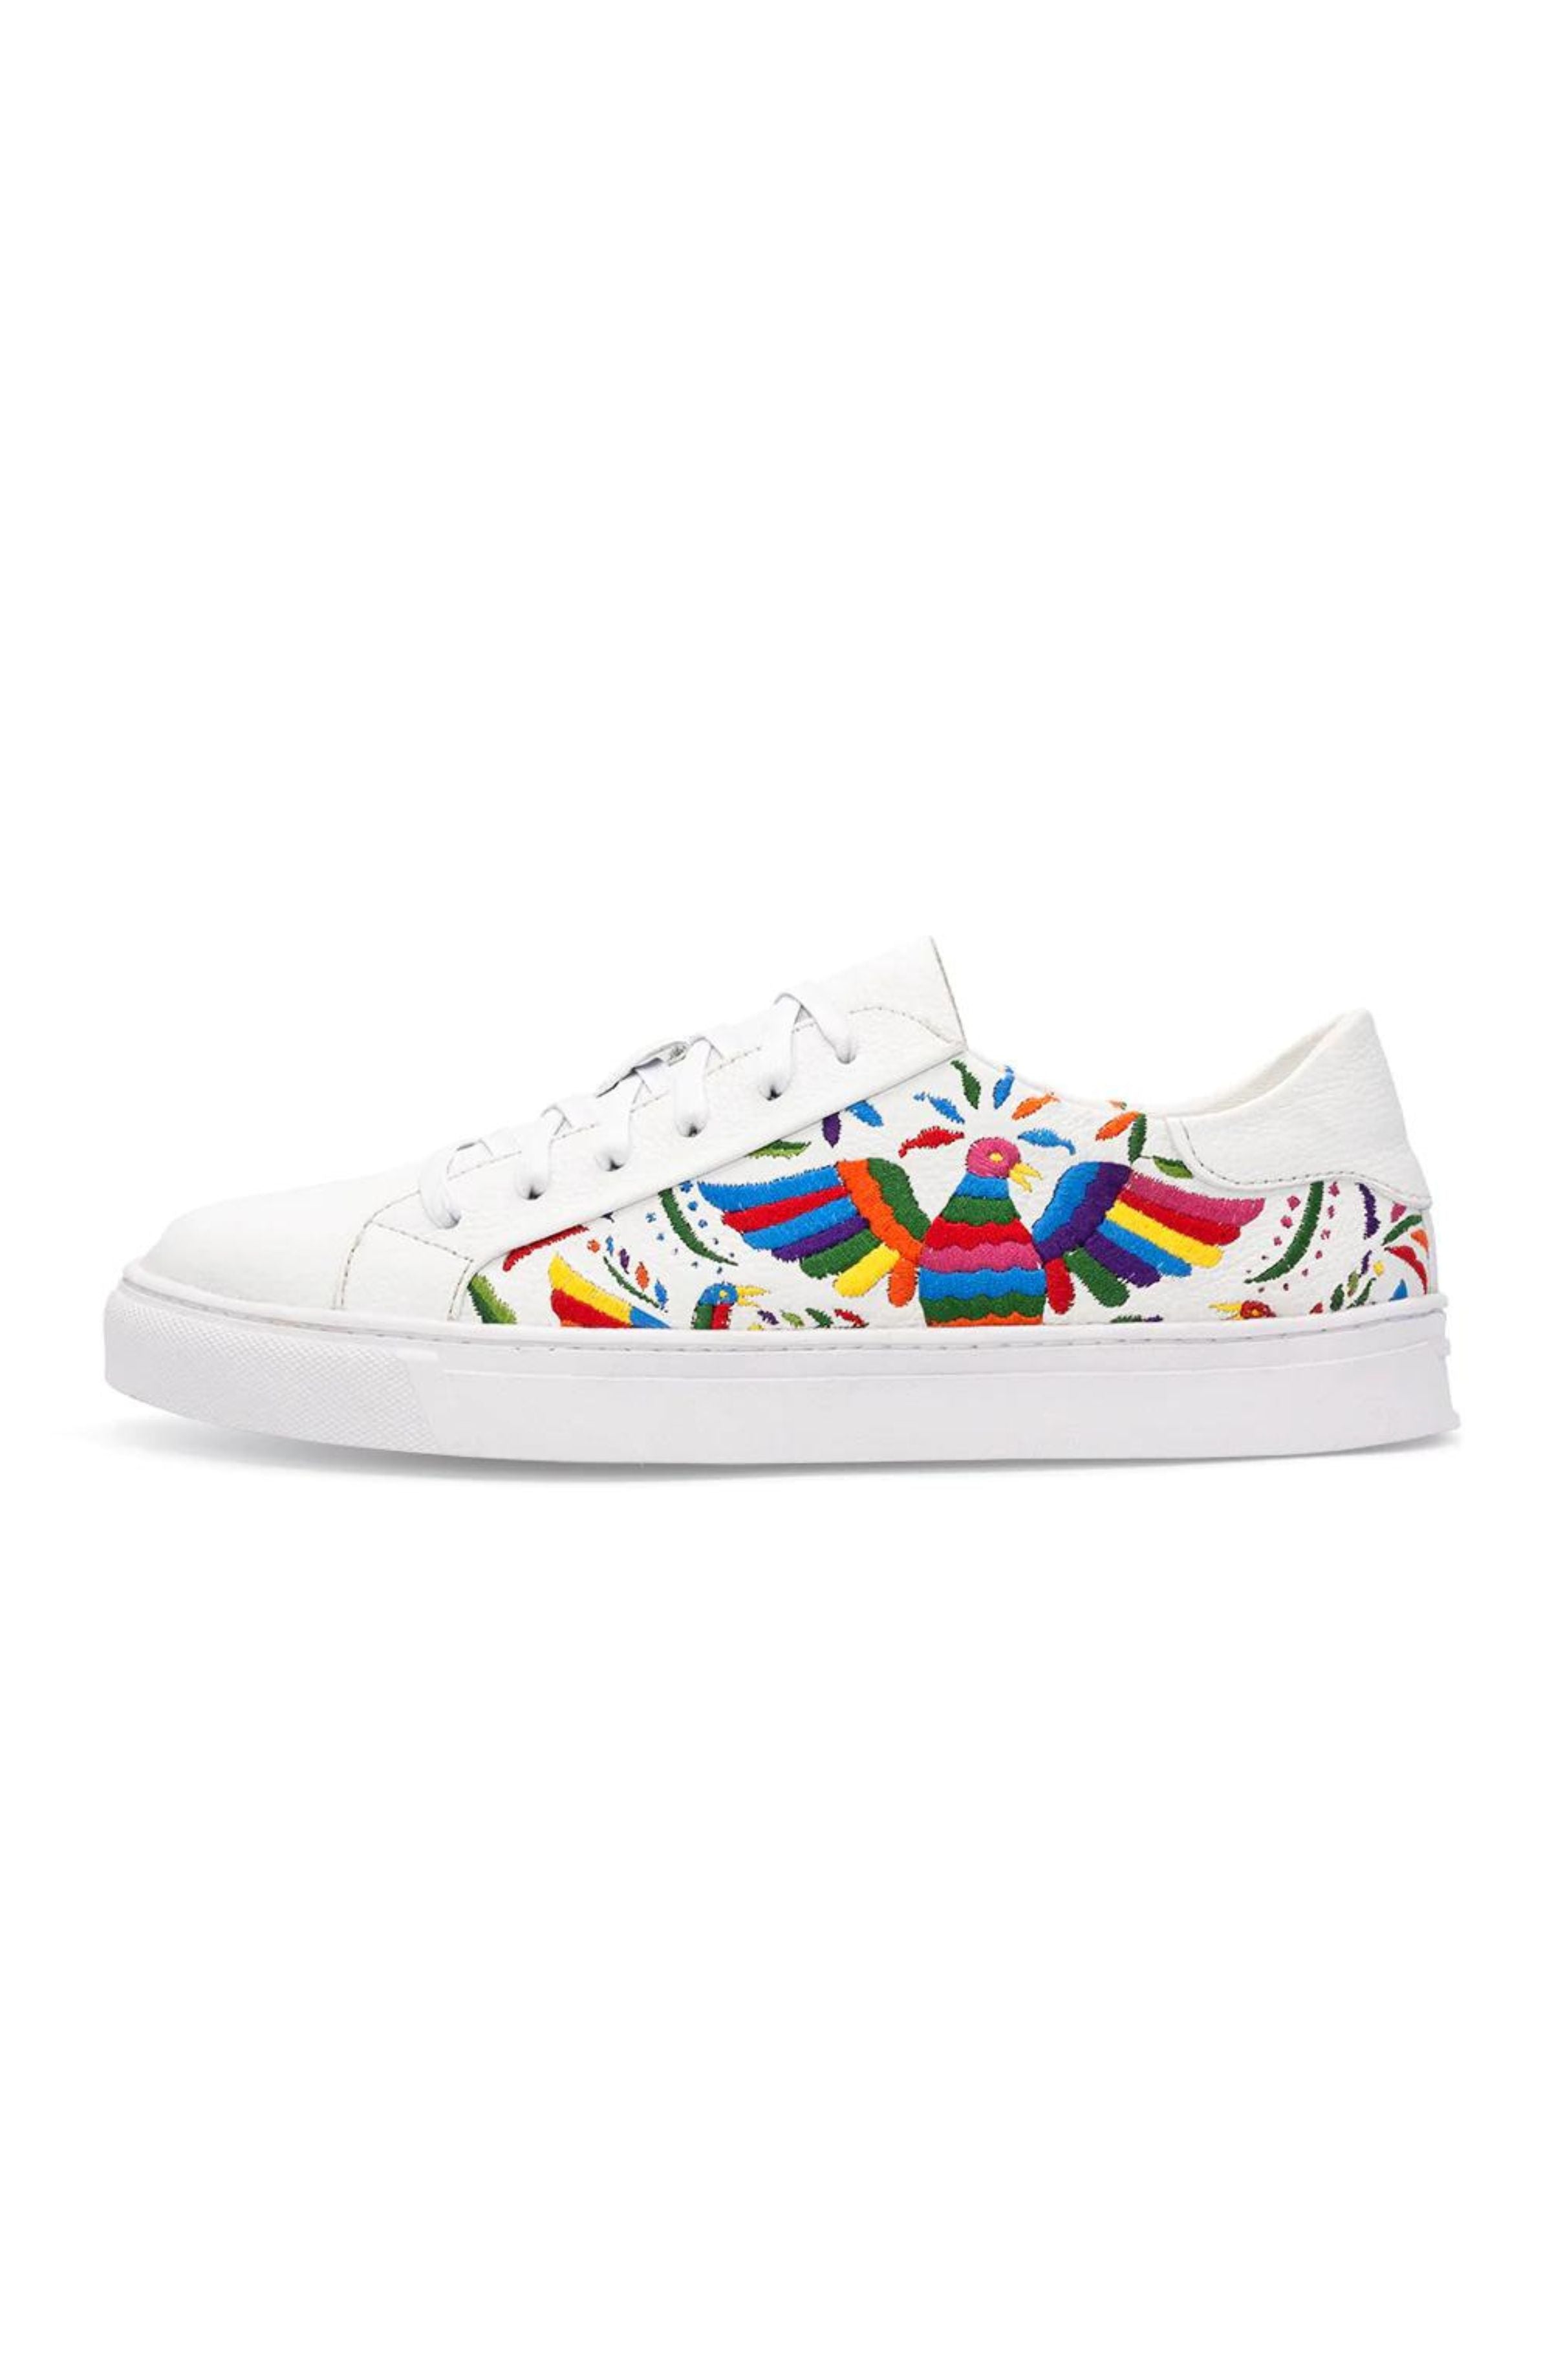 Charleston Shoe Co. Leon - White Rainbow